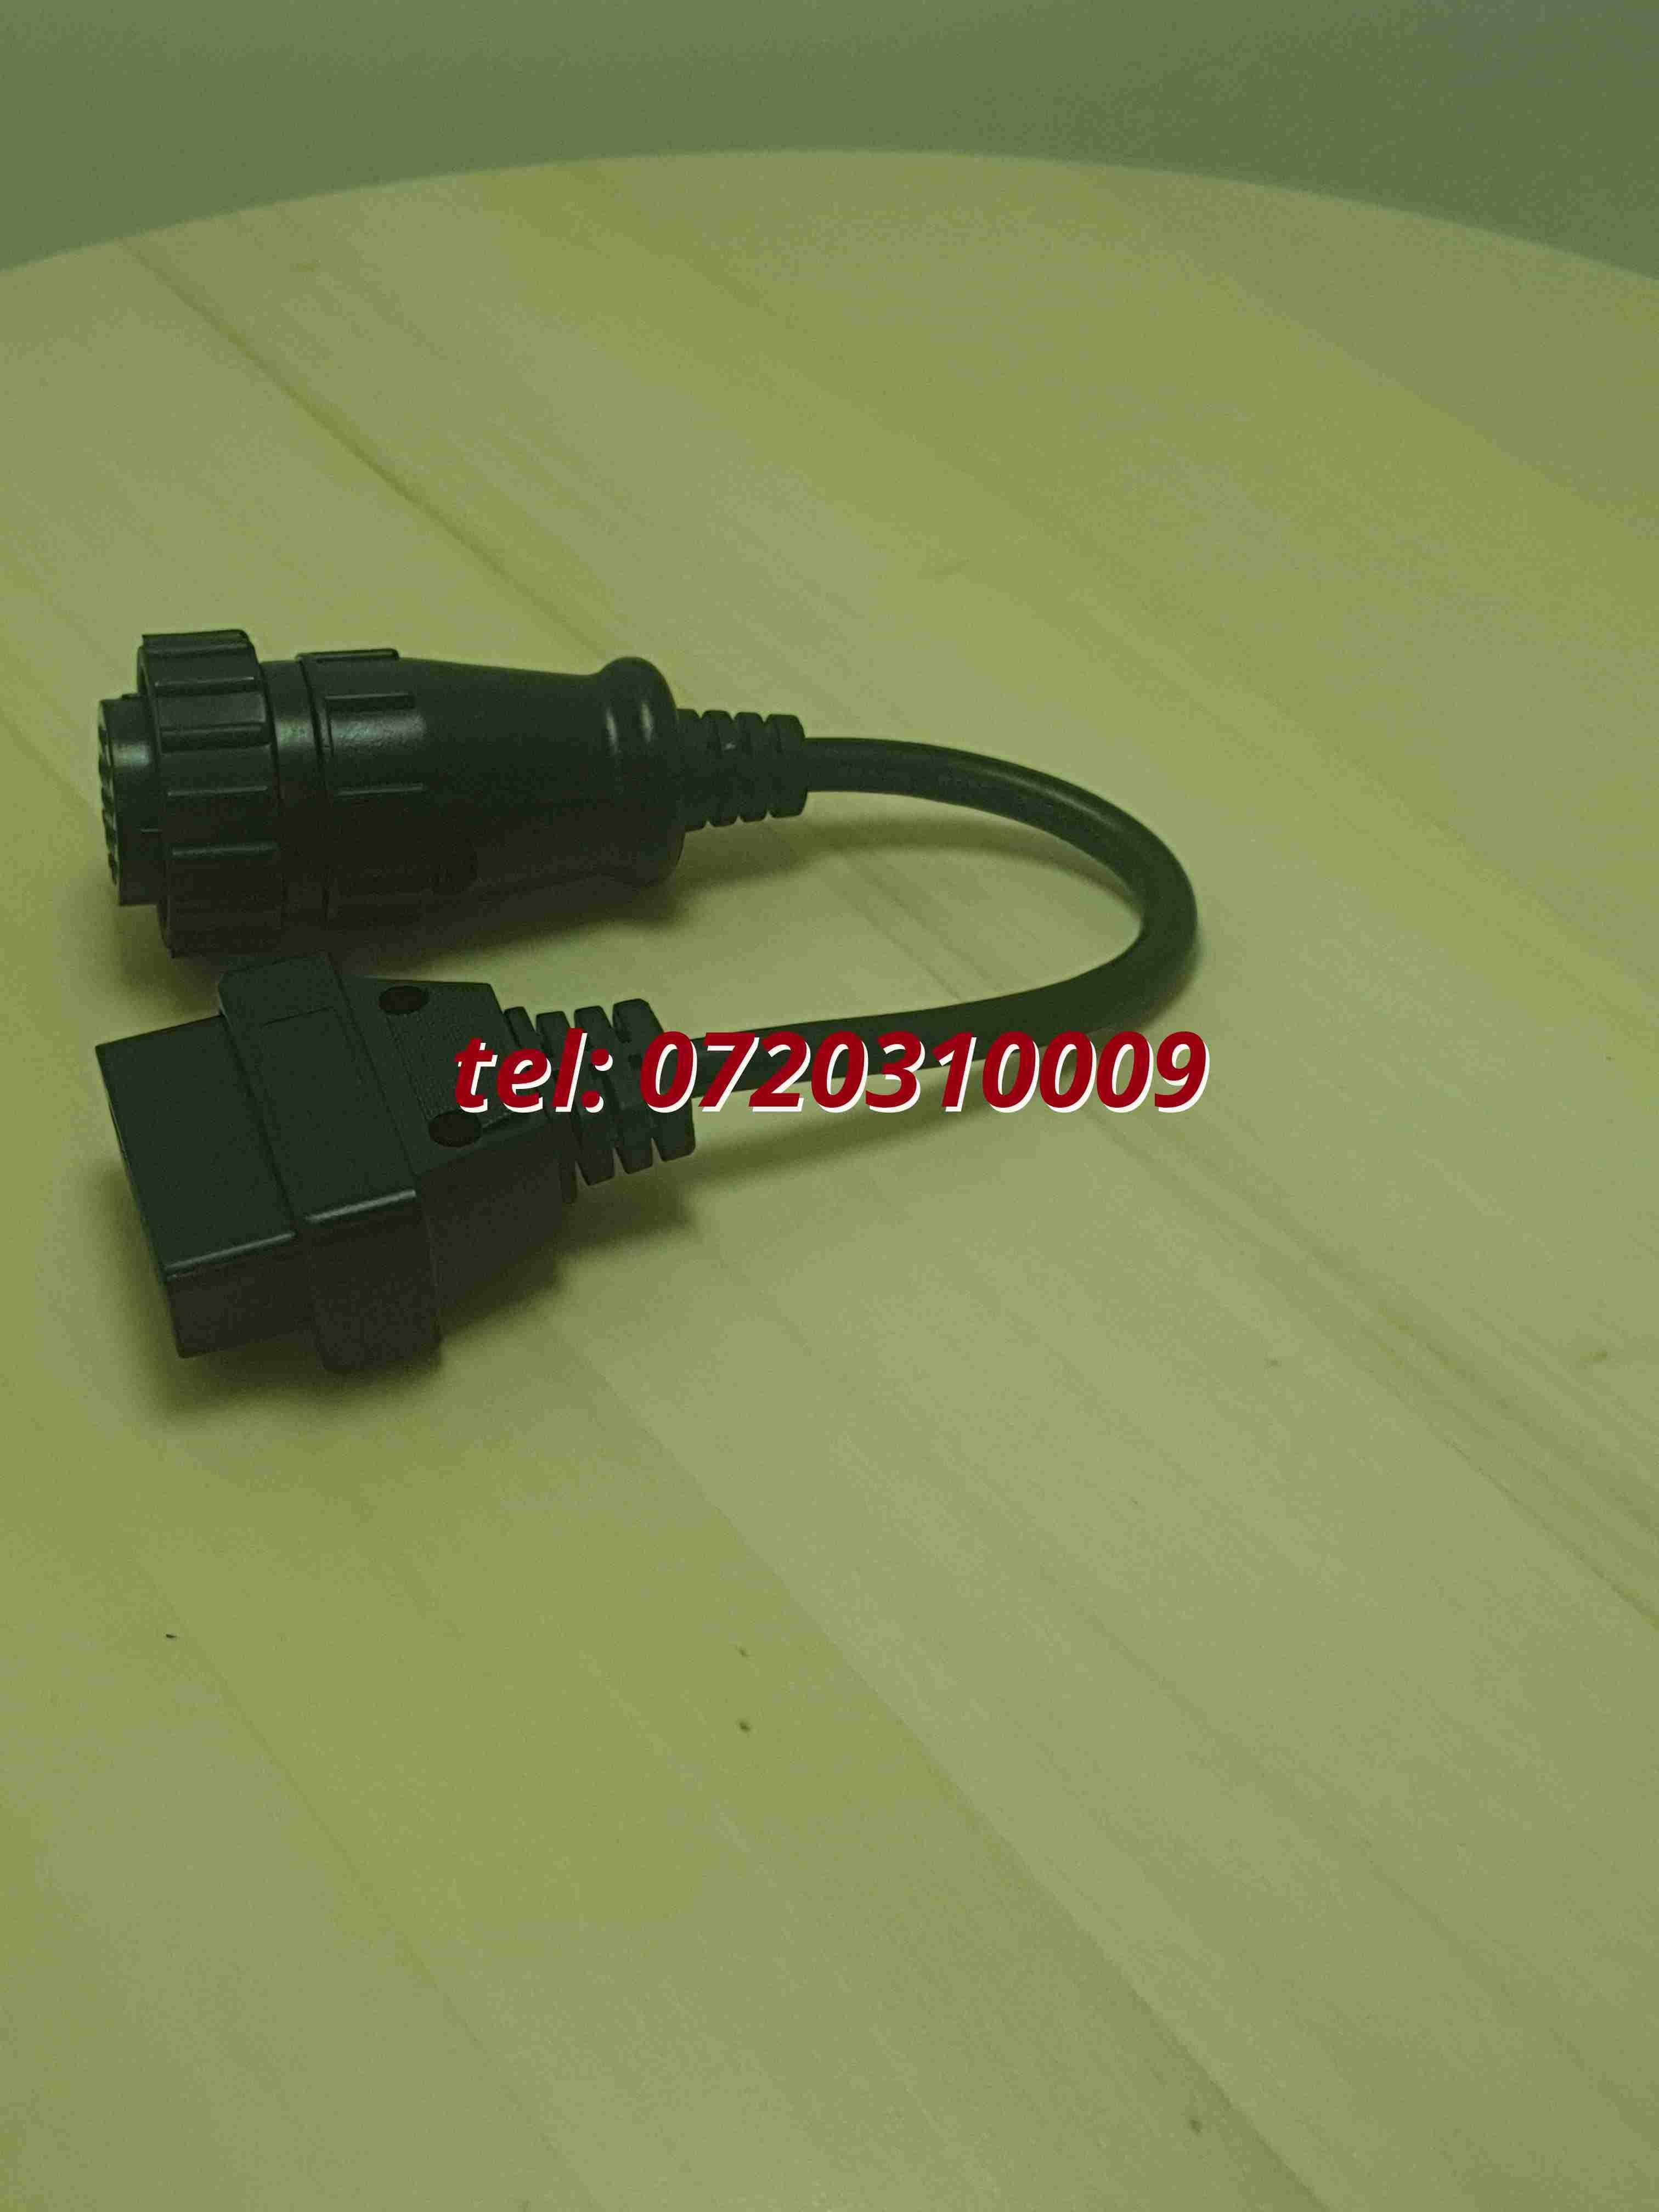 Cablu Adaptor Obd2 Delphi Pentru Daf delphi Autocom Wurth Bosch Kts